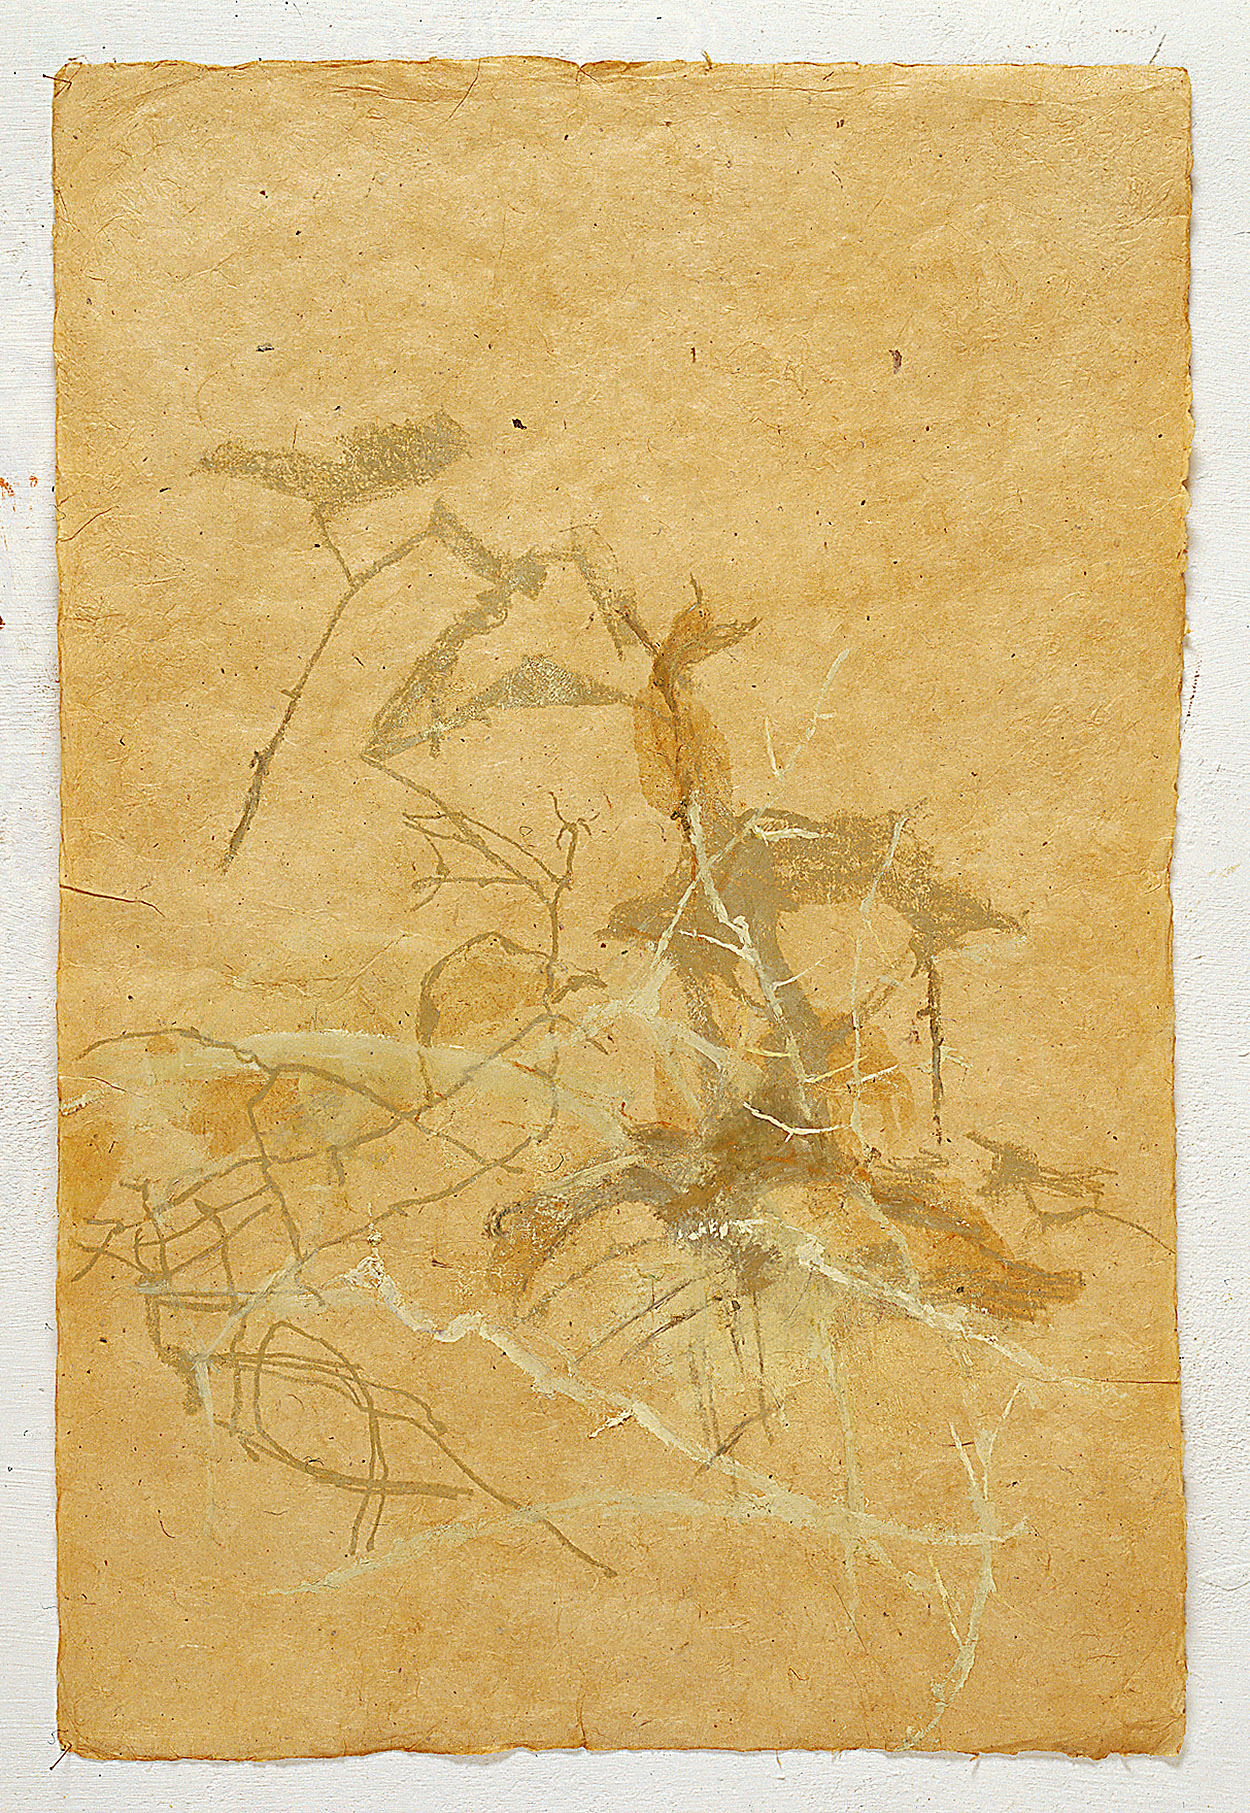    De un árbol   Oil paint on hand made nepalí paper. 51,5 x 76,5 cm. 